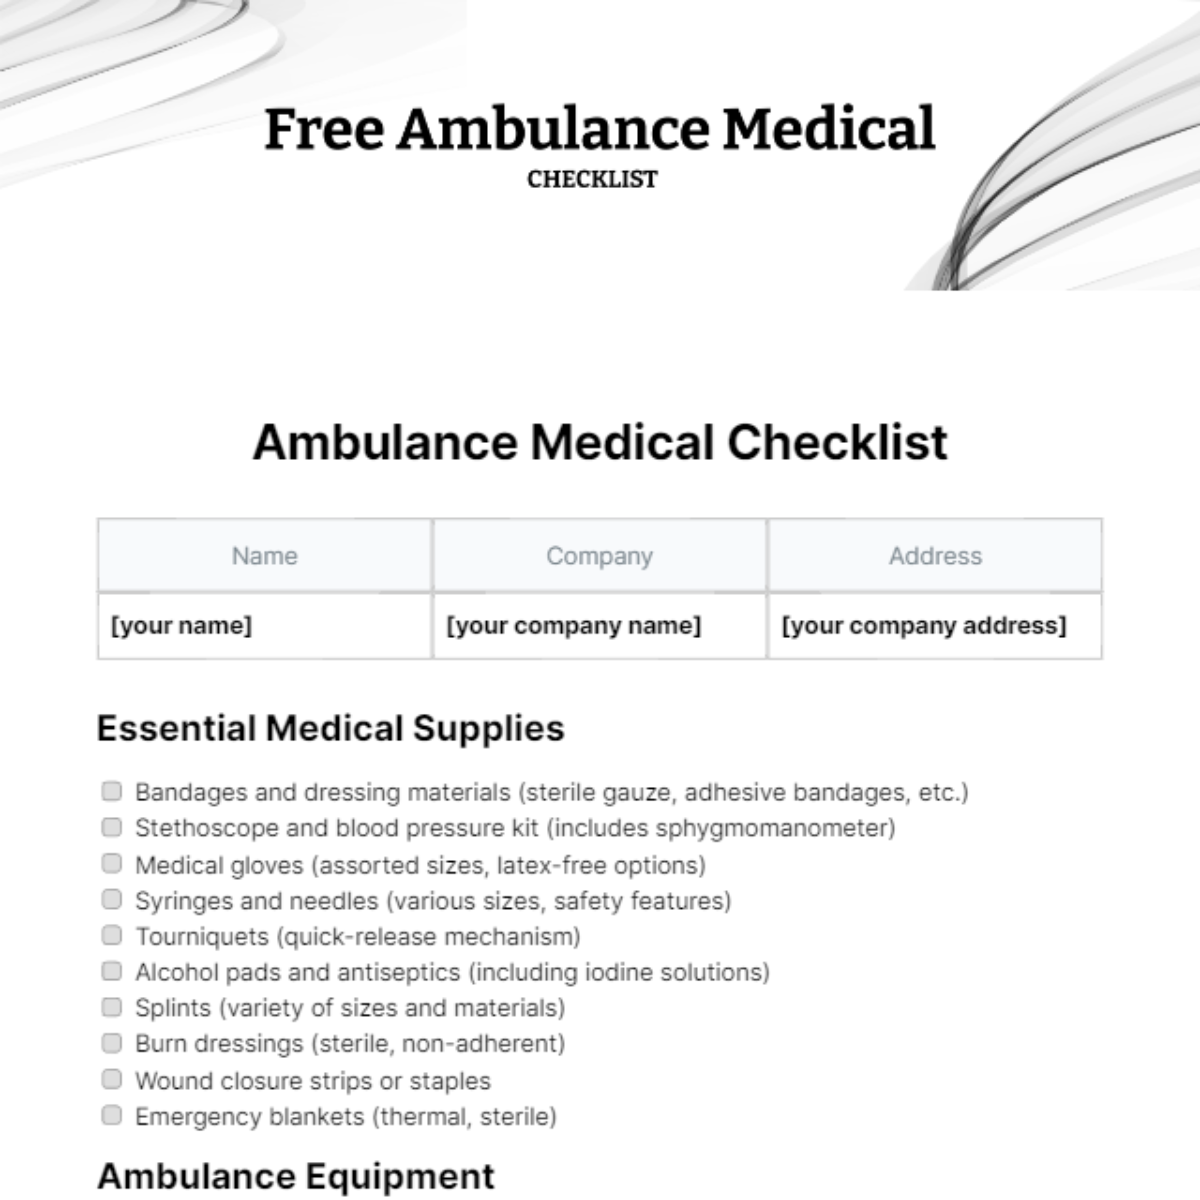 Ambulance Medical Checklist Template